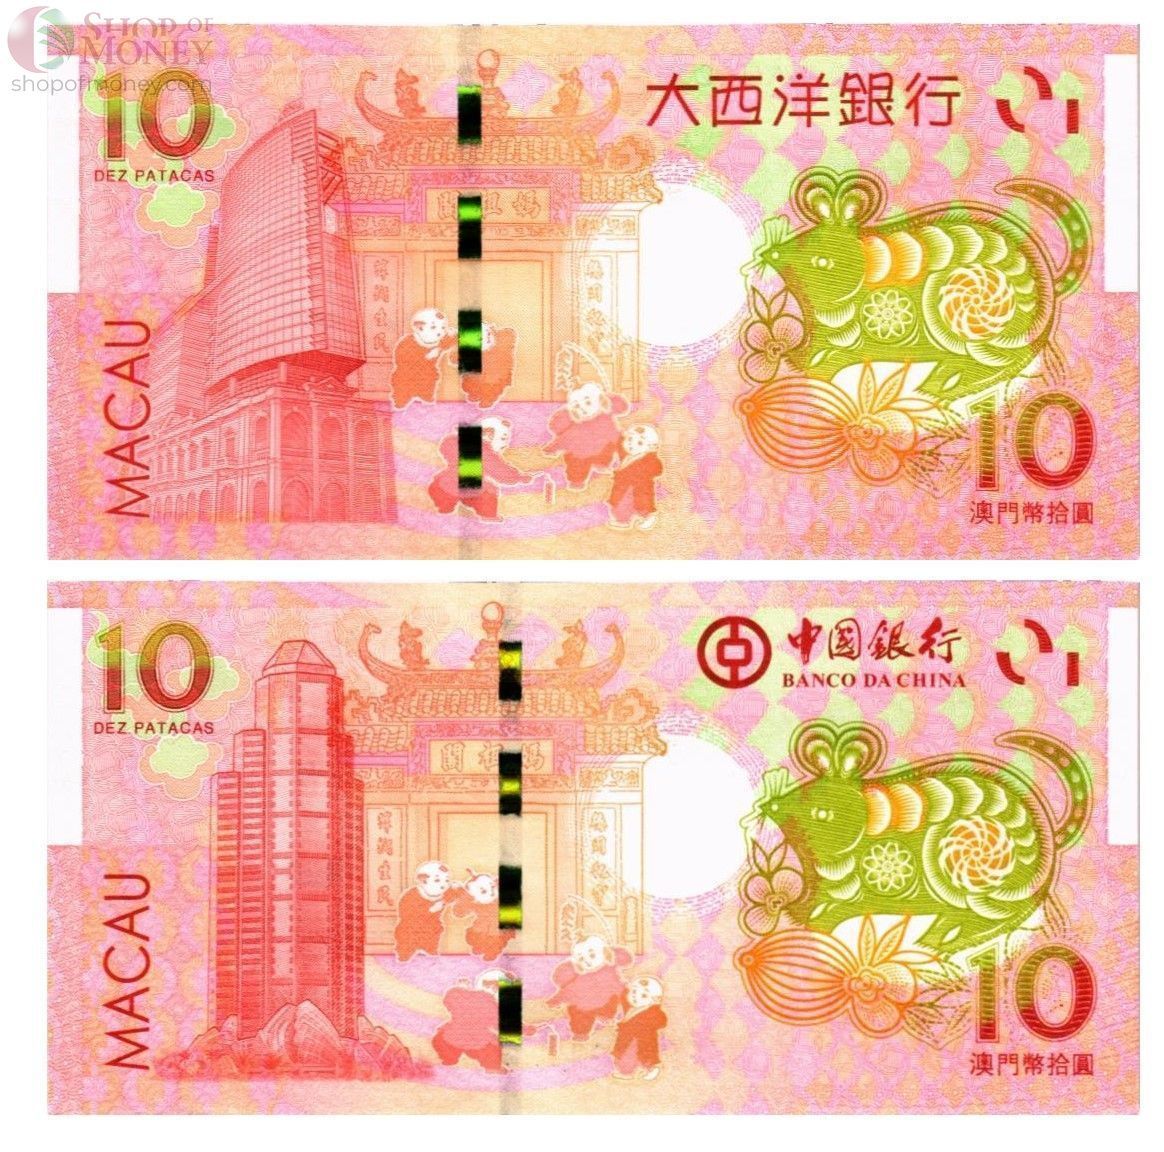 МАКАО 10 ПАТАК (ULTRAMARINO + BANK OF CHINA) 2